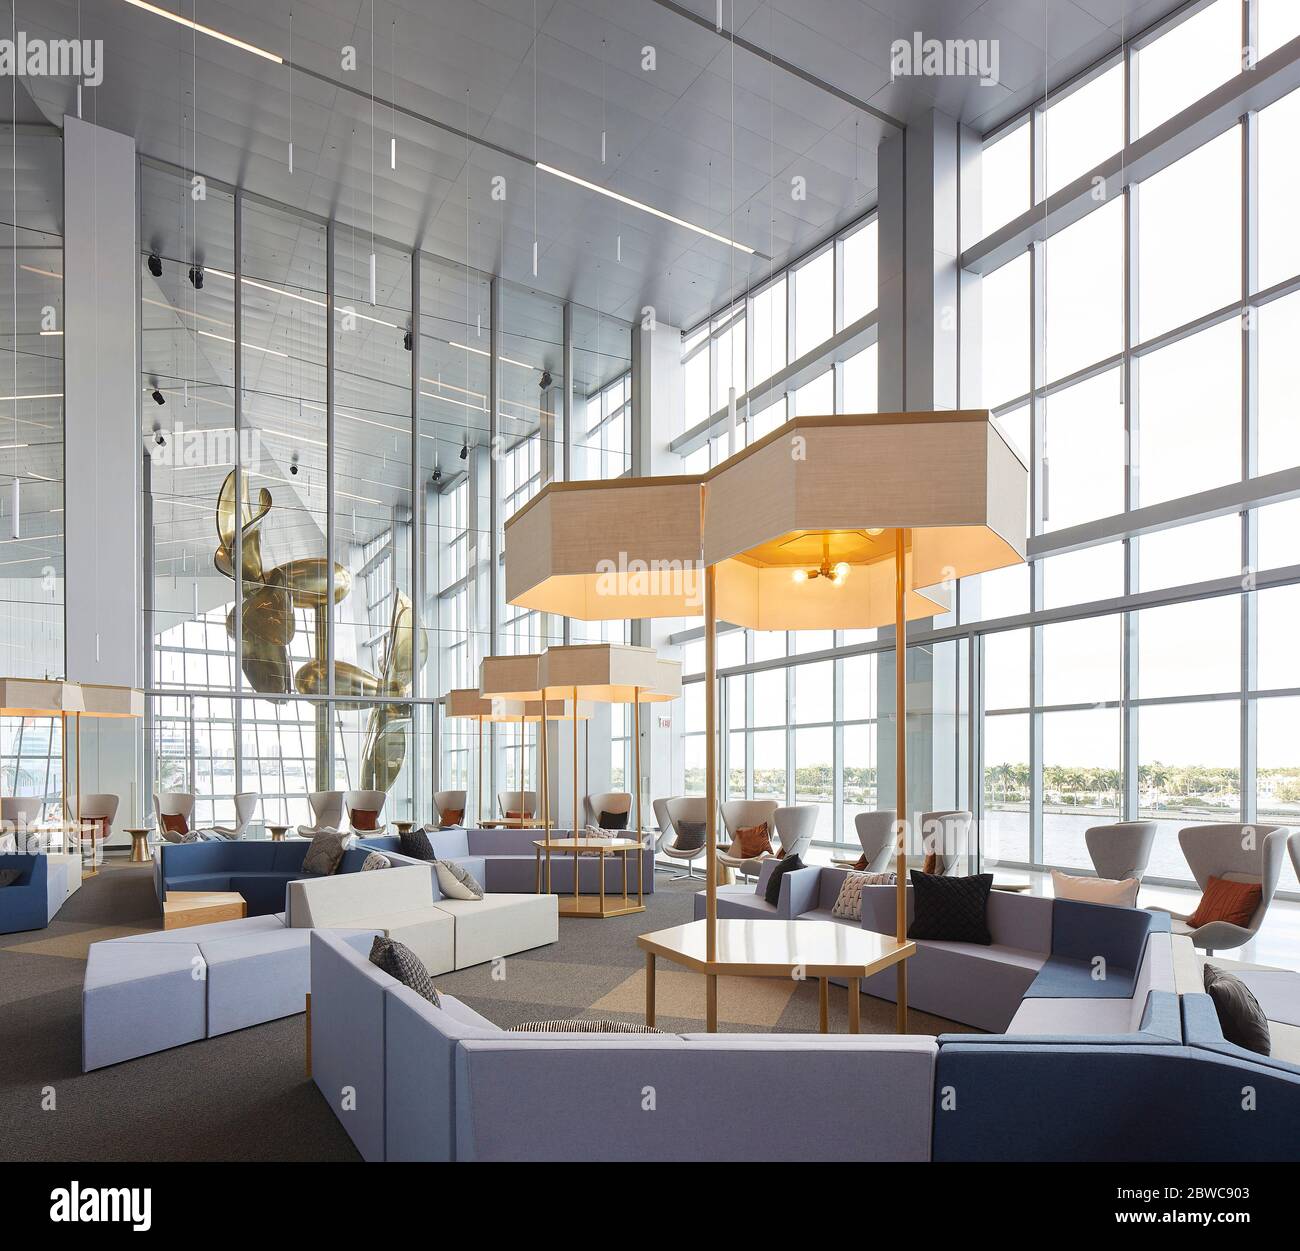 Interior view. Royal Caribbean Miami Cruise Terminal, Miami, United States. Architect: Broadway Malyan Limited, 2019. Stock Photo